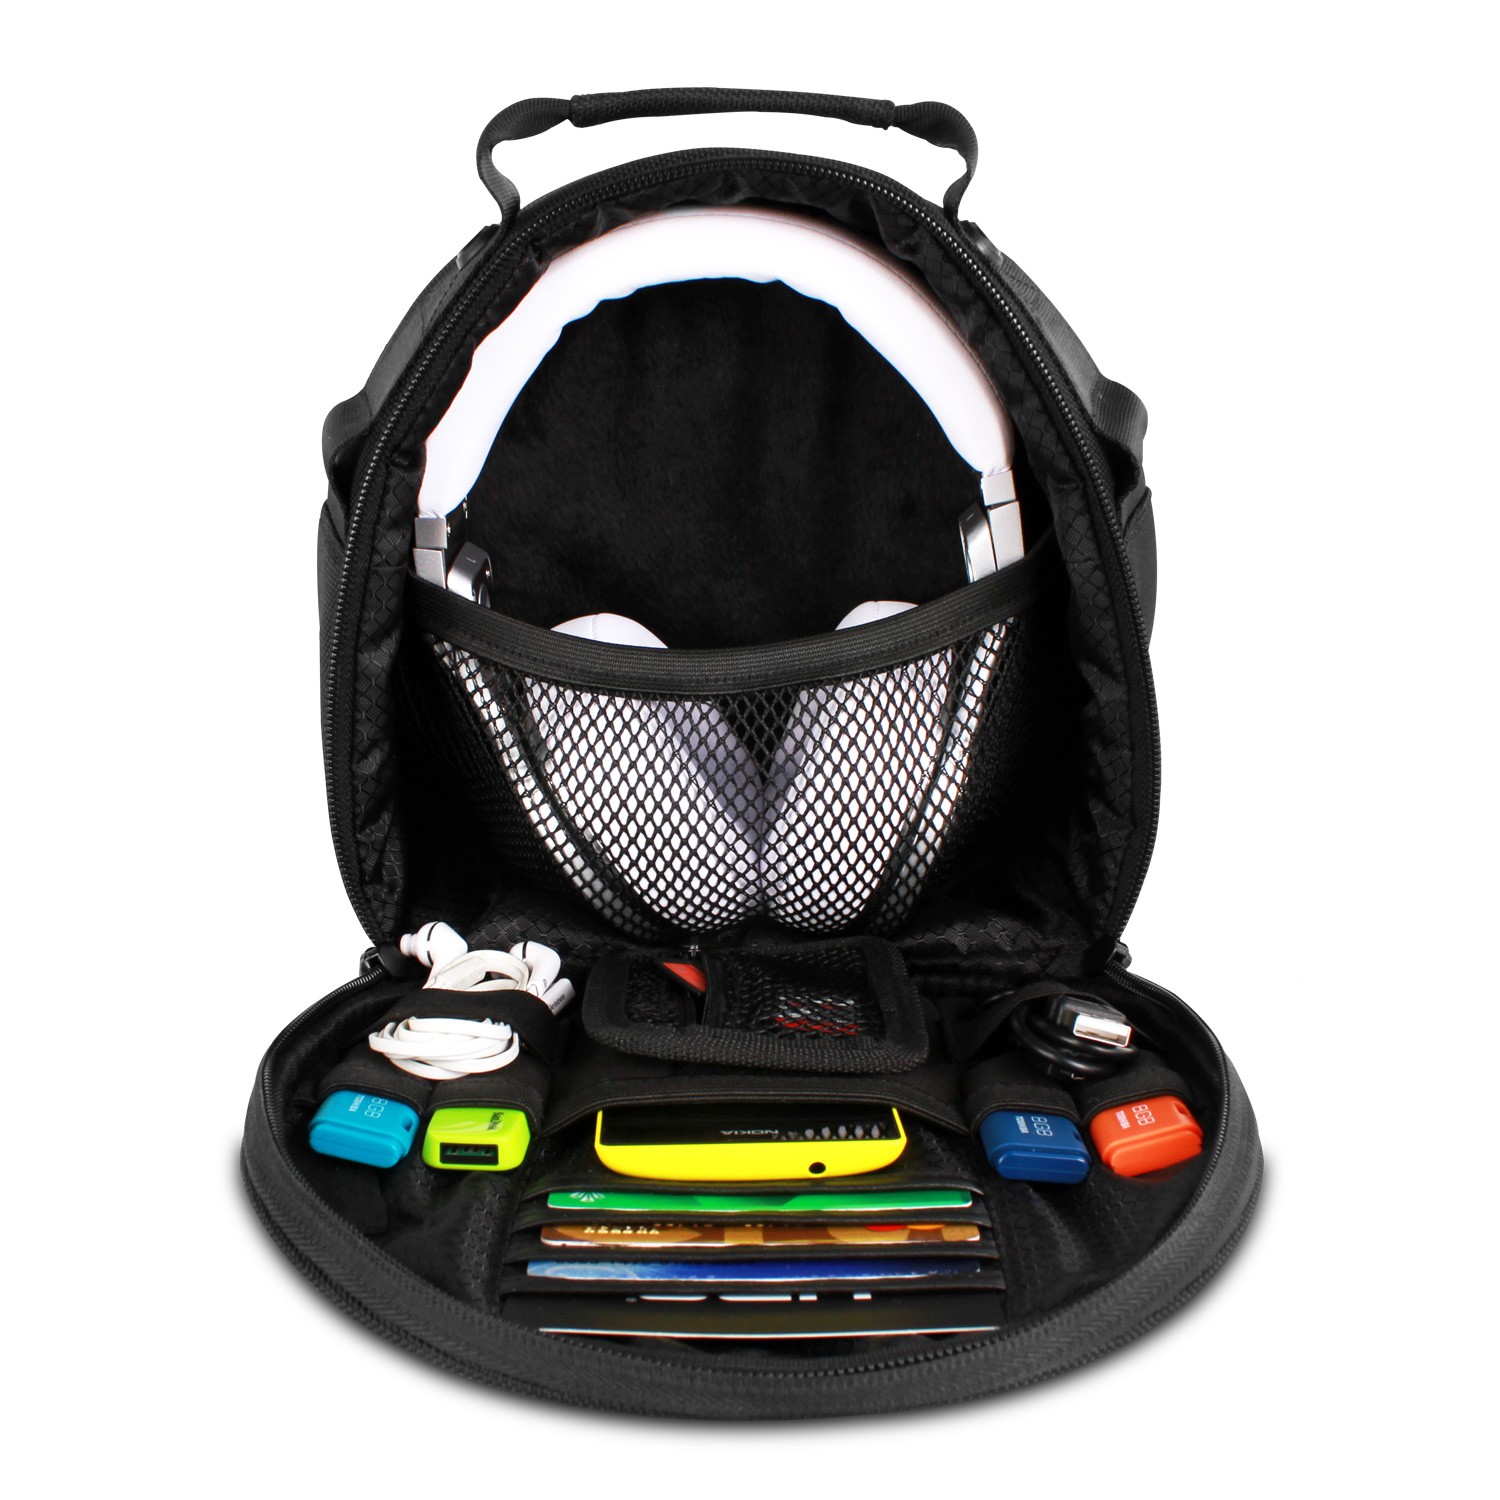 UDG Ultimate DIGI Headphone Bag Yellow по цене 7 200 ₽